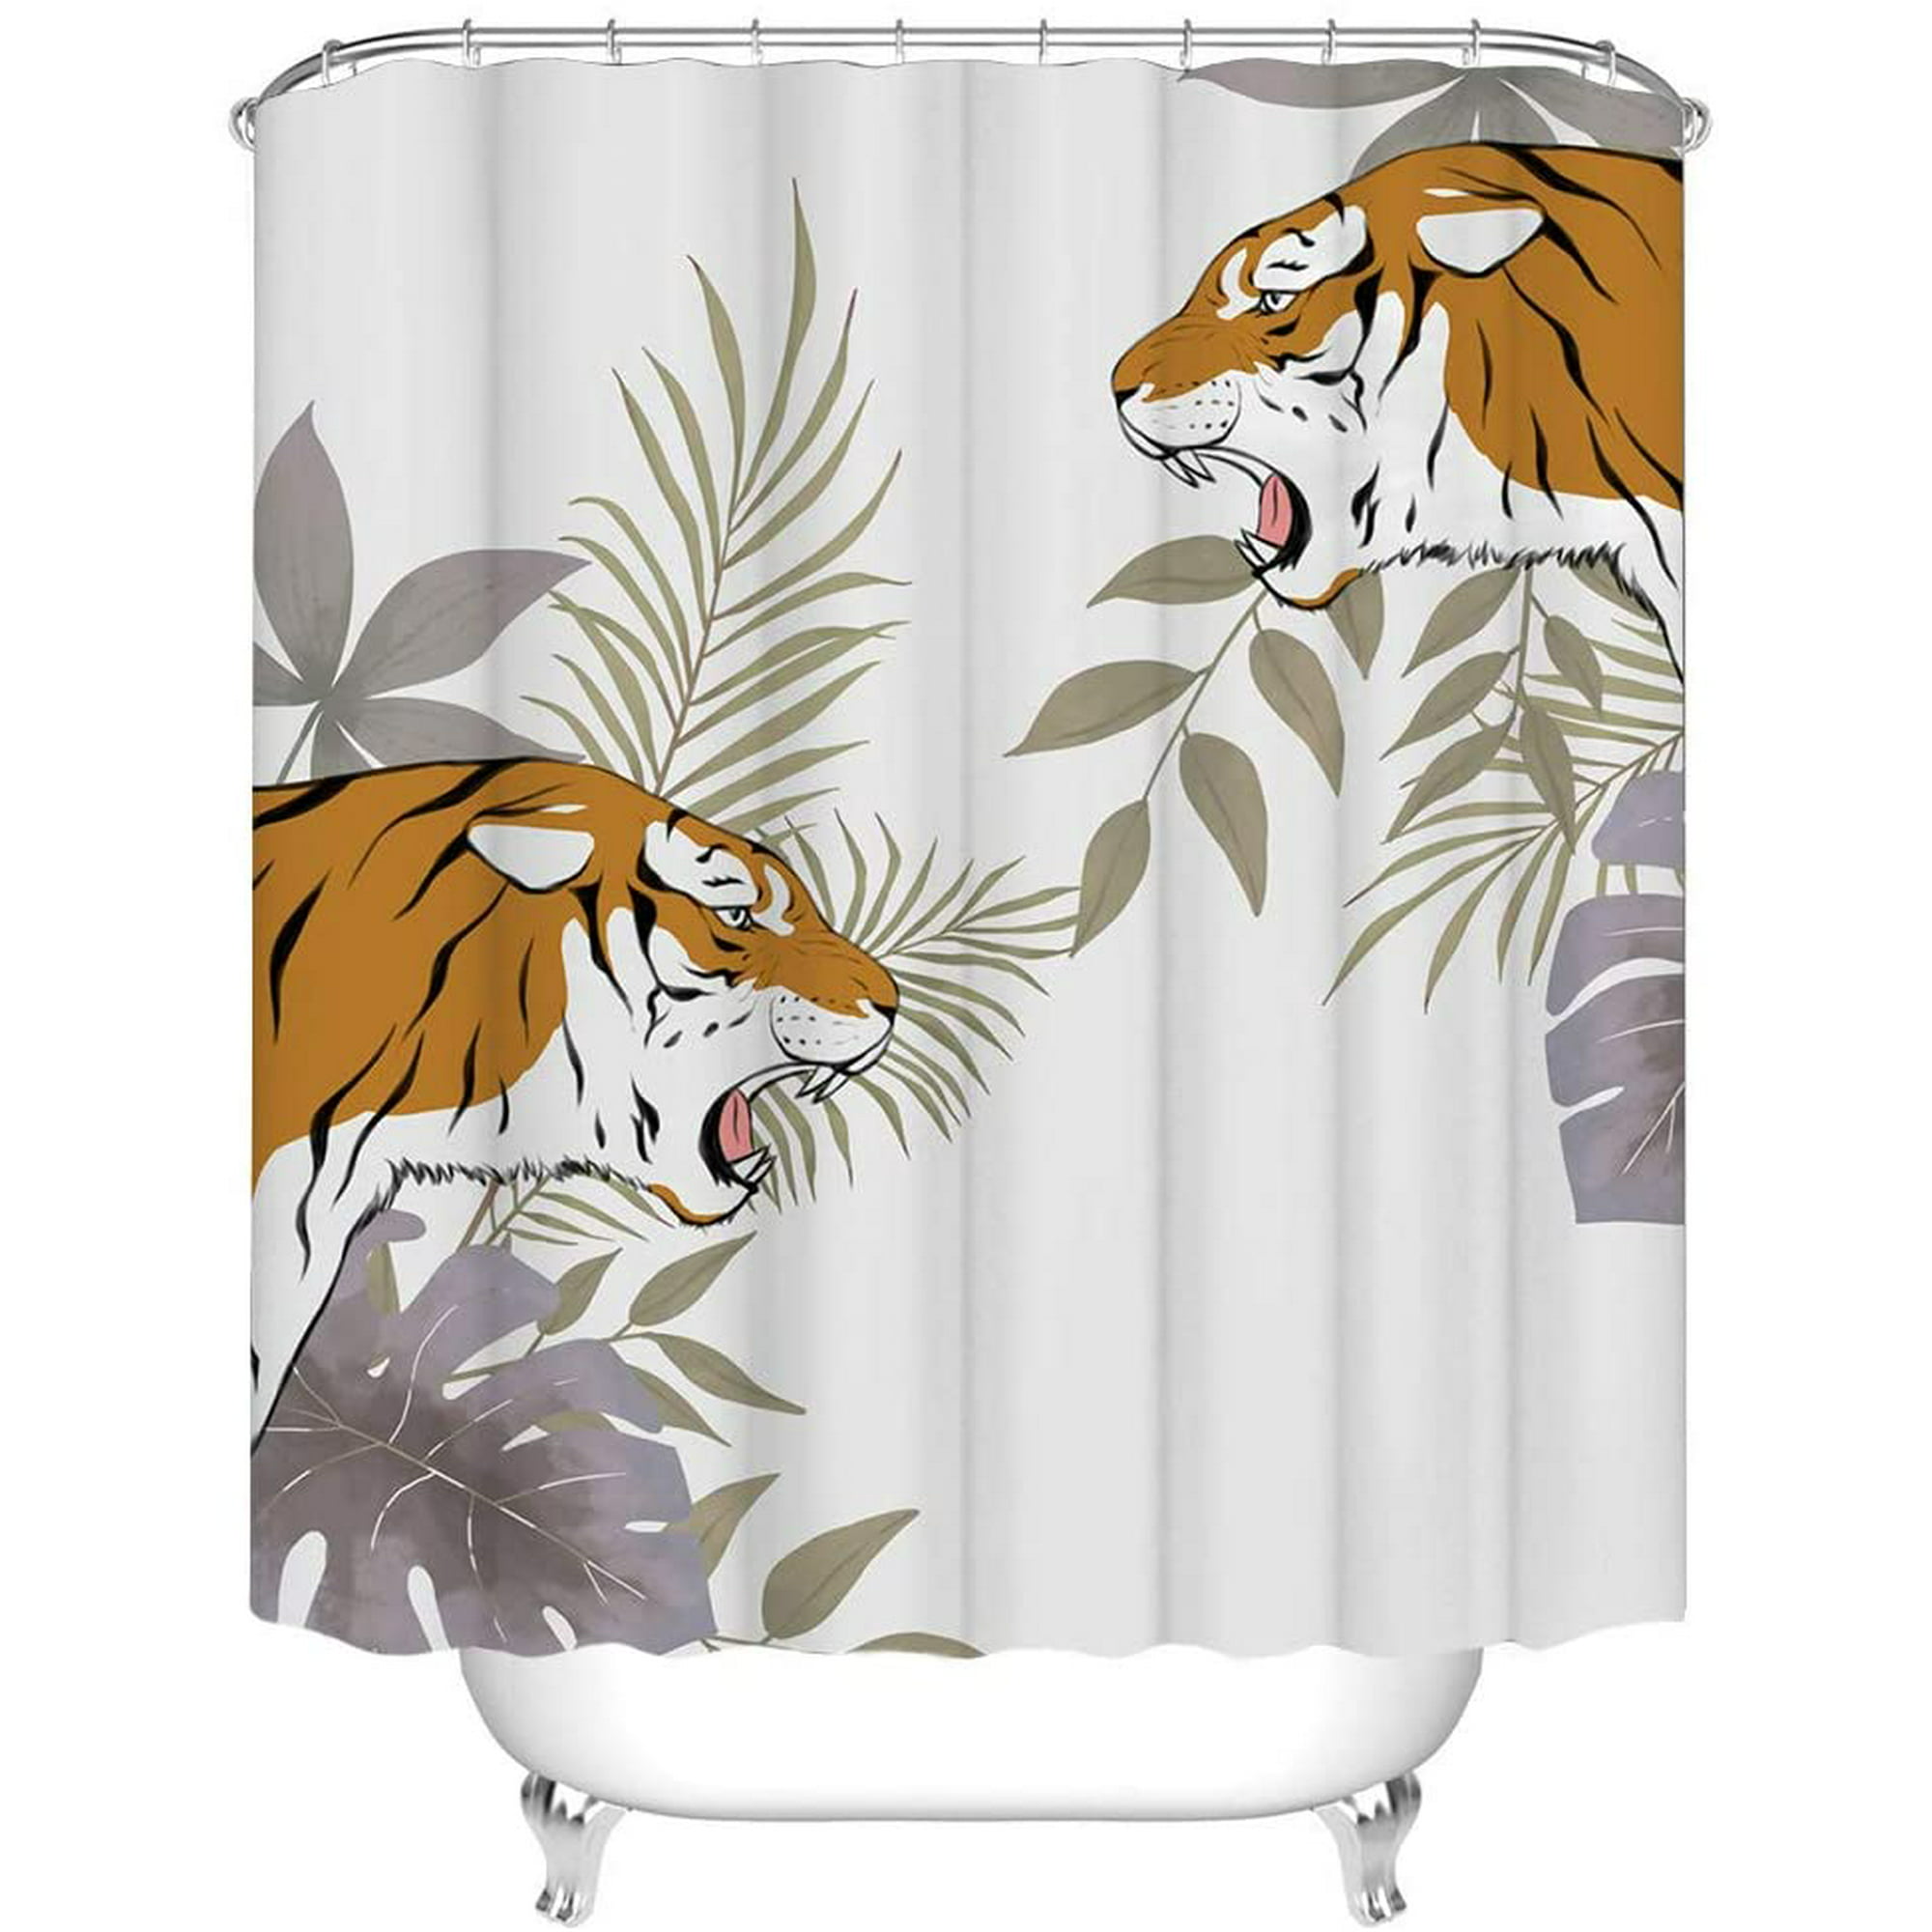 Wild Animal Shower Curtains For, Wild Animal Shower Curtain